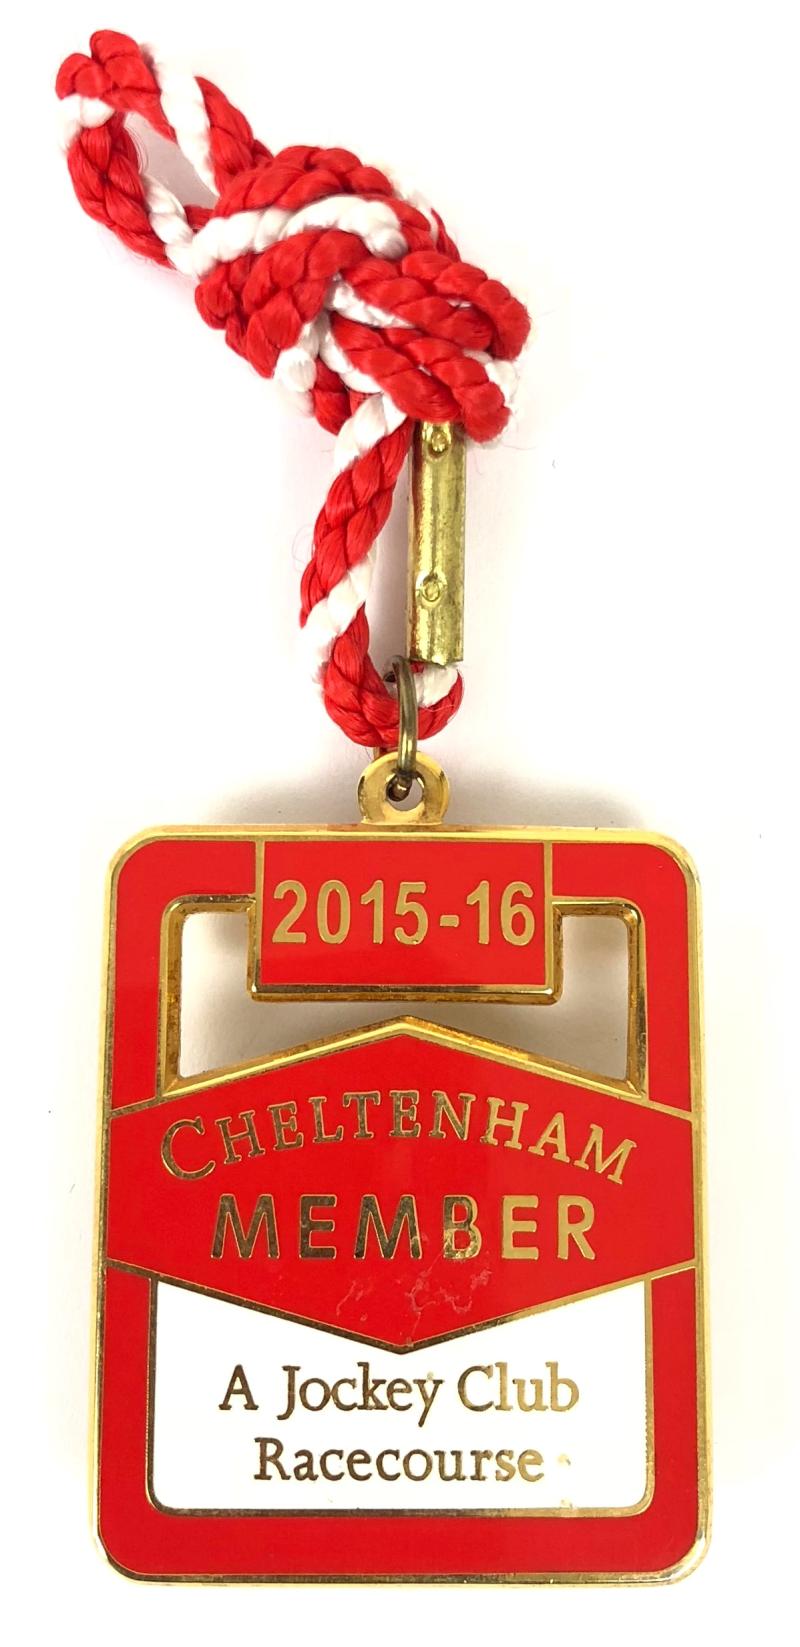 2015 -16 Cheltenham Annual Member Jockey Club Racecourse Badge